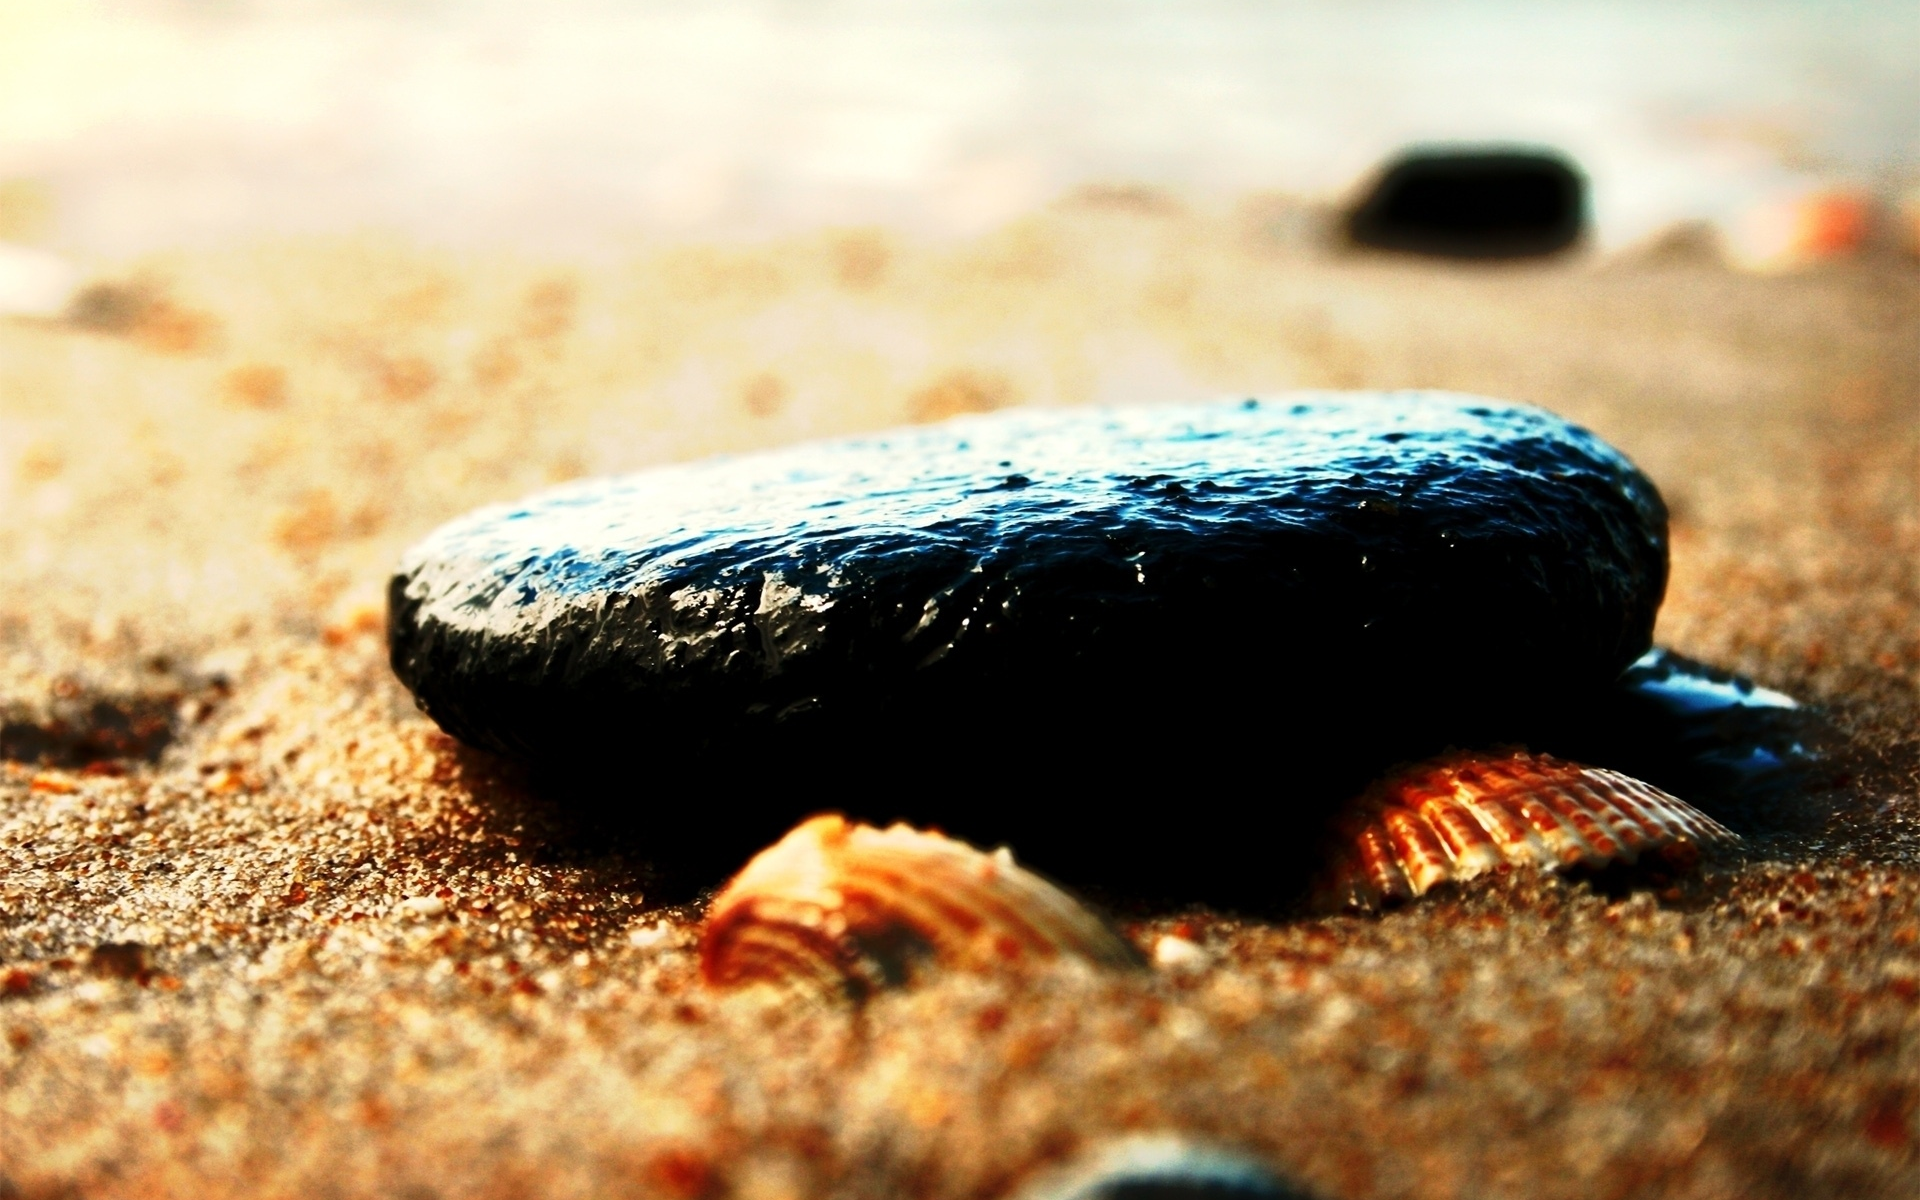 морская тематика, макро, песок, ракушки, камни, галька, пляж